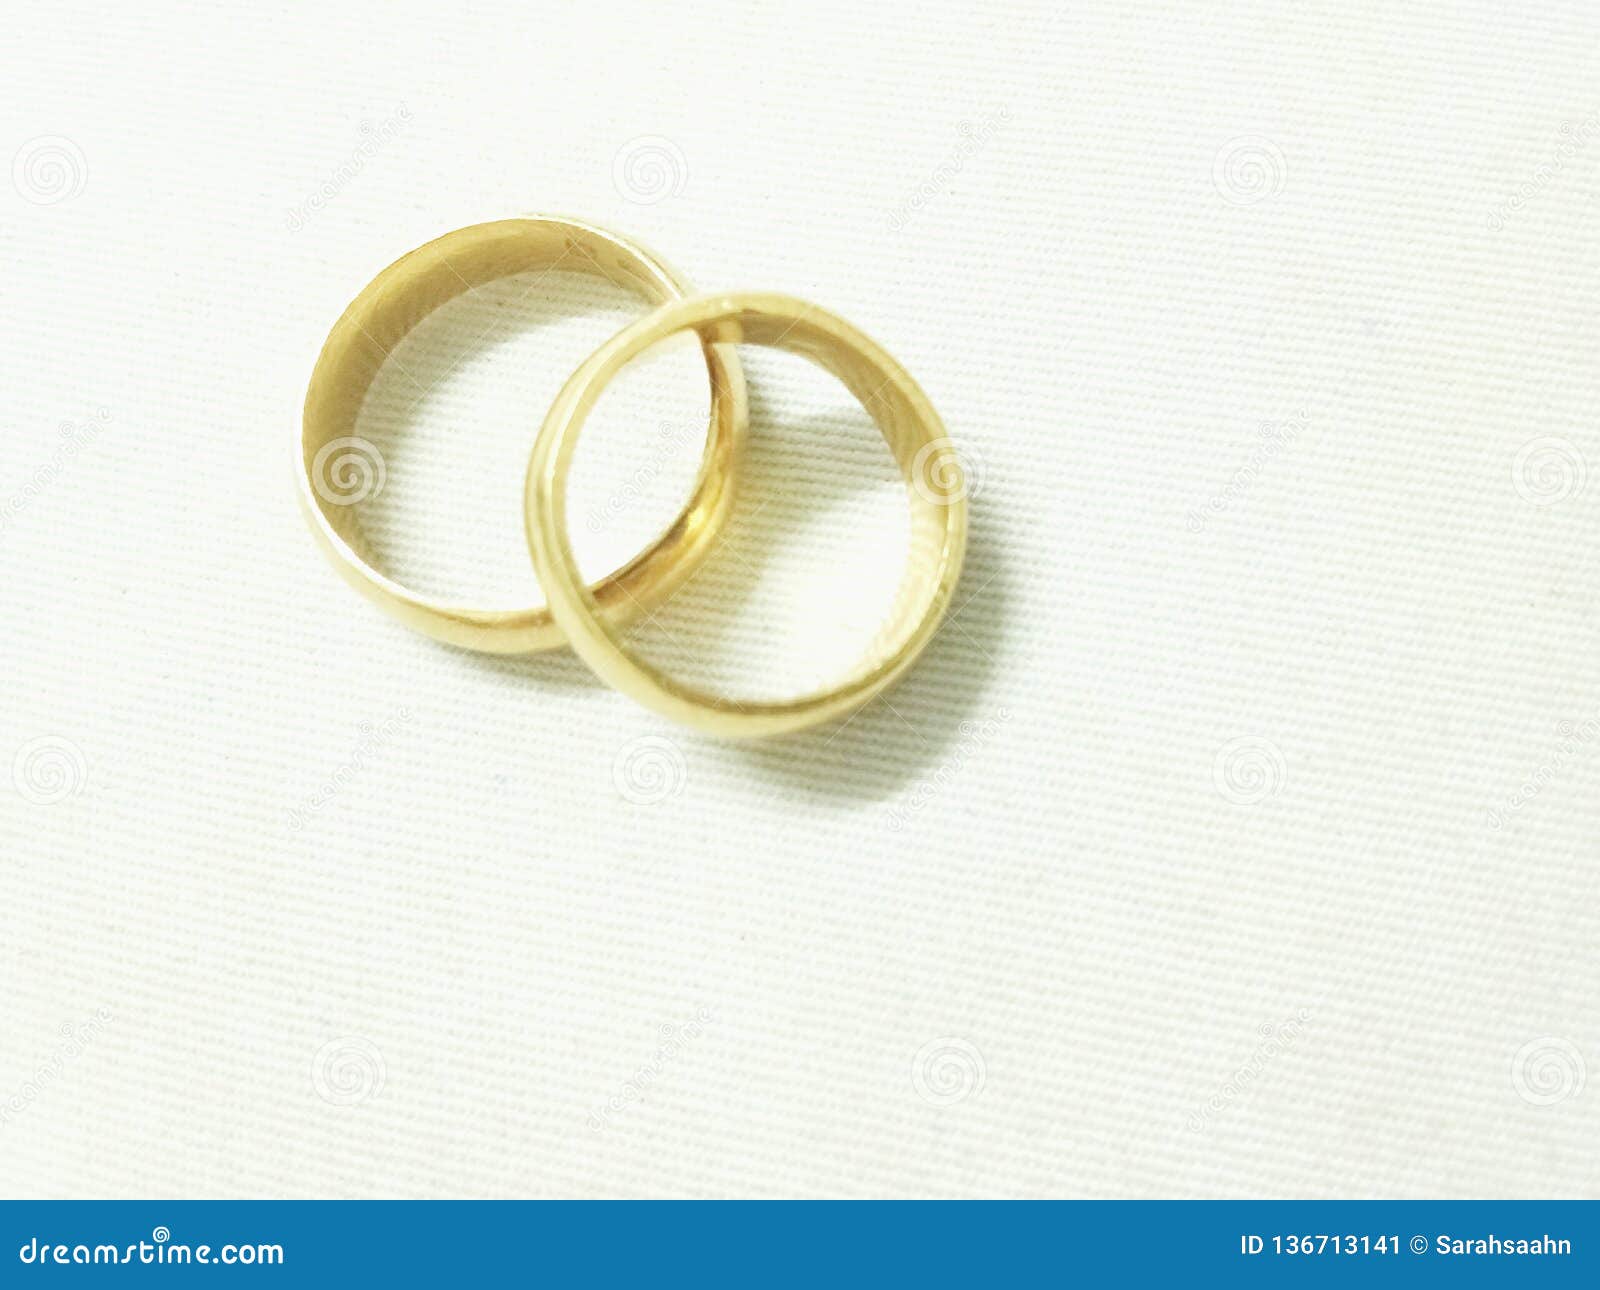 Manufacturer of 22kt gold cz round shape ring llr114 | Jewelxy - 155945